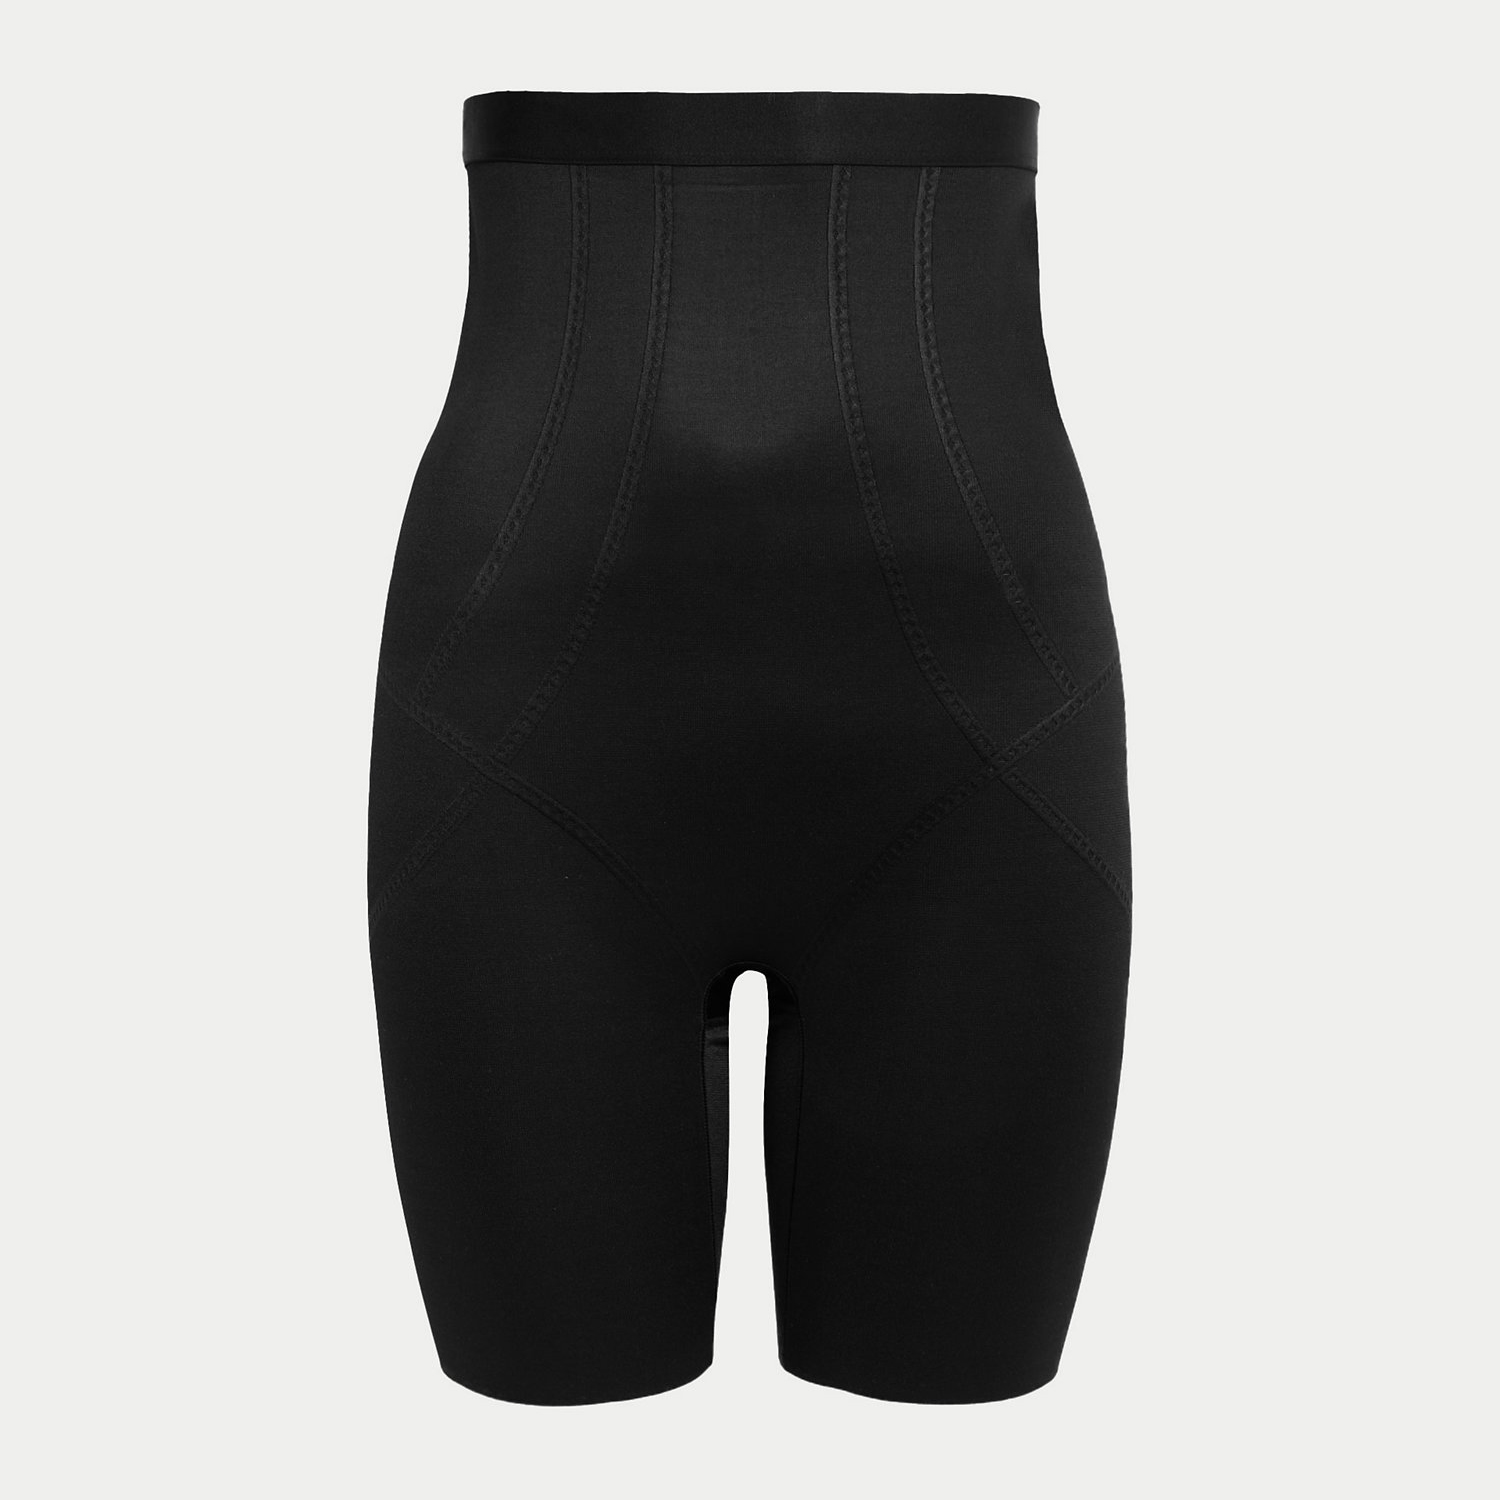 Black shapewear waist-cinching shorts. Shop now